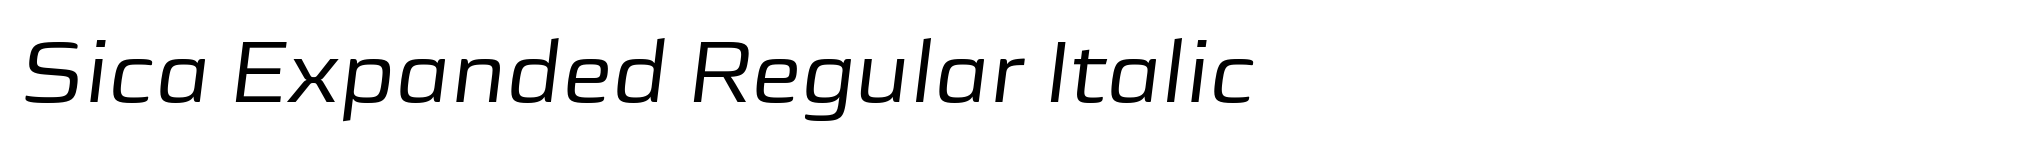 Sica Expanded Regular Italic image